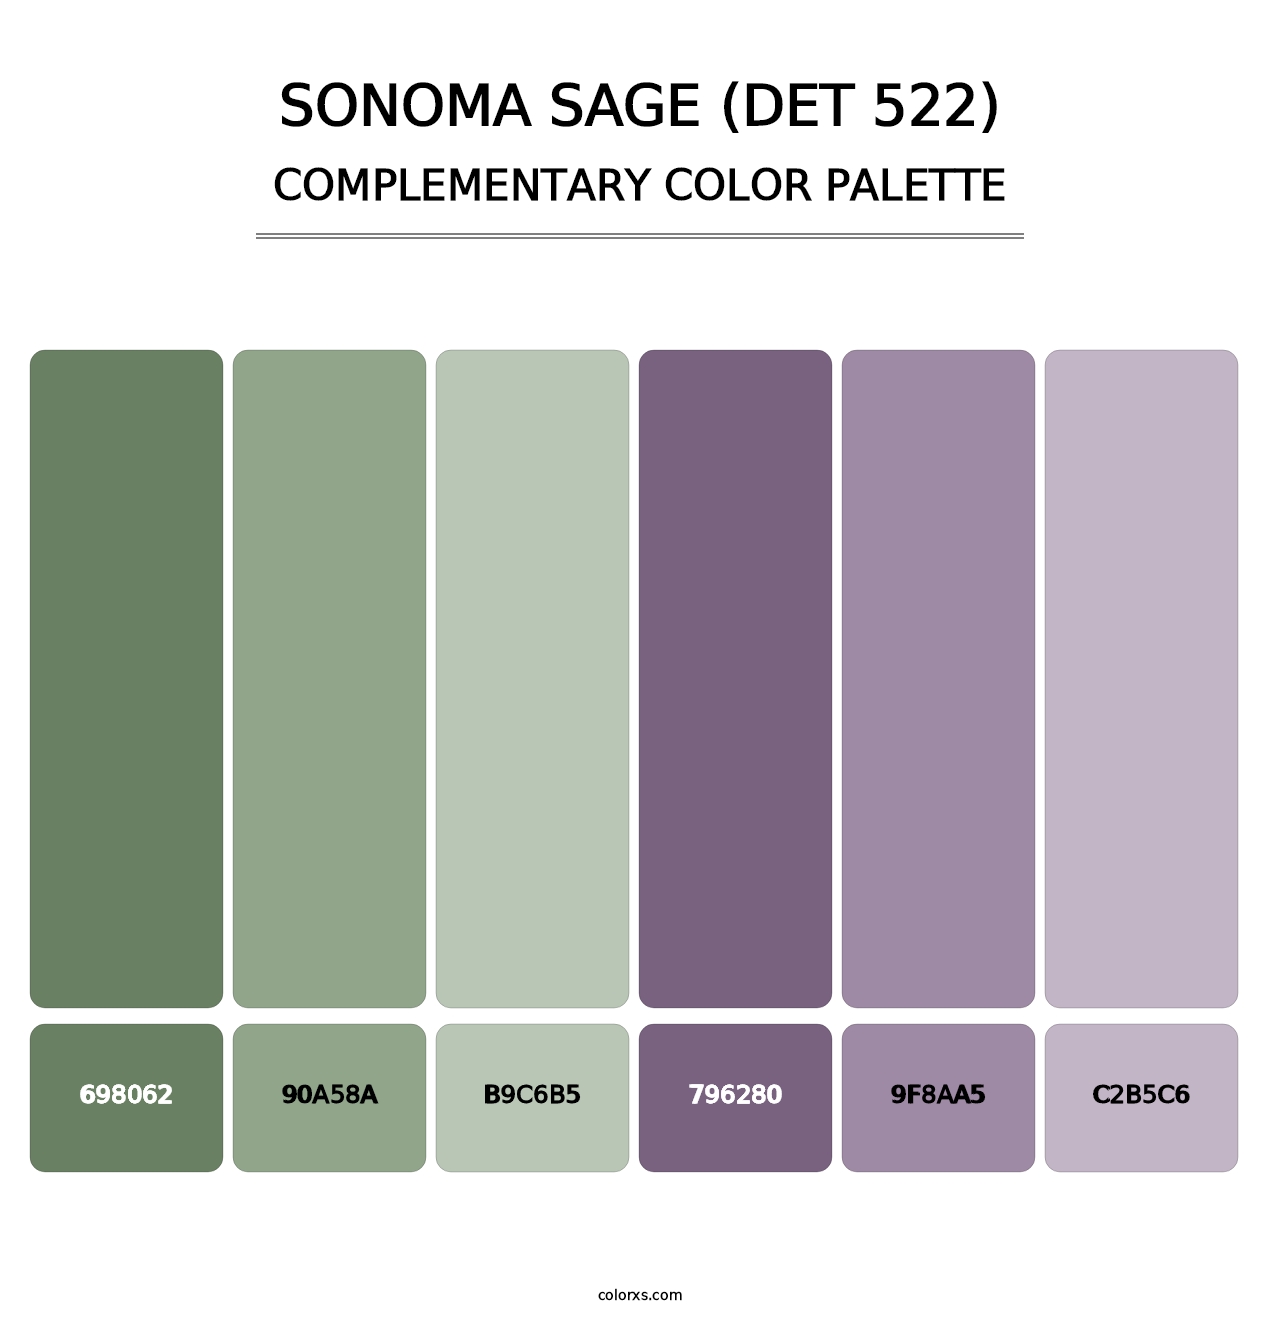 Sonoma Sage (DET 522) - Complementary Color Palette